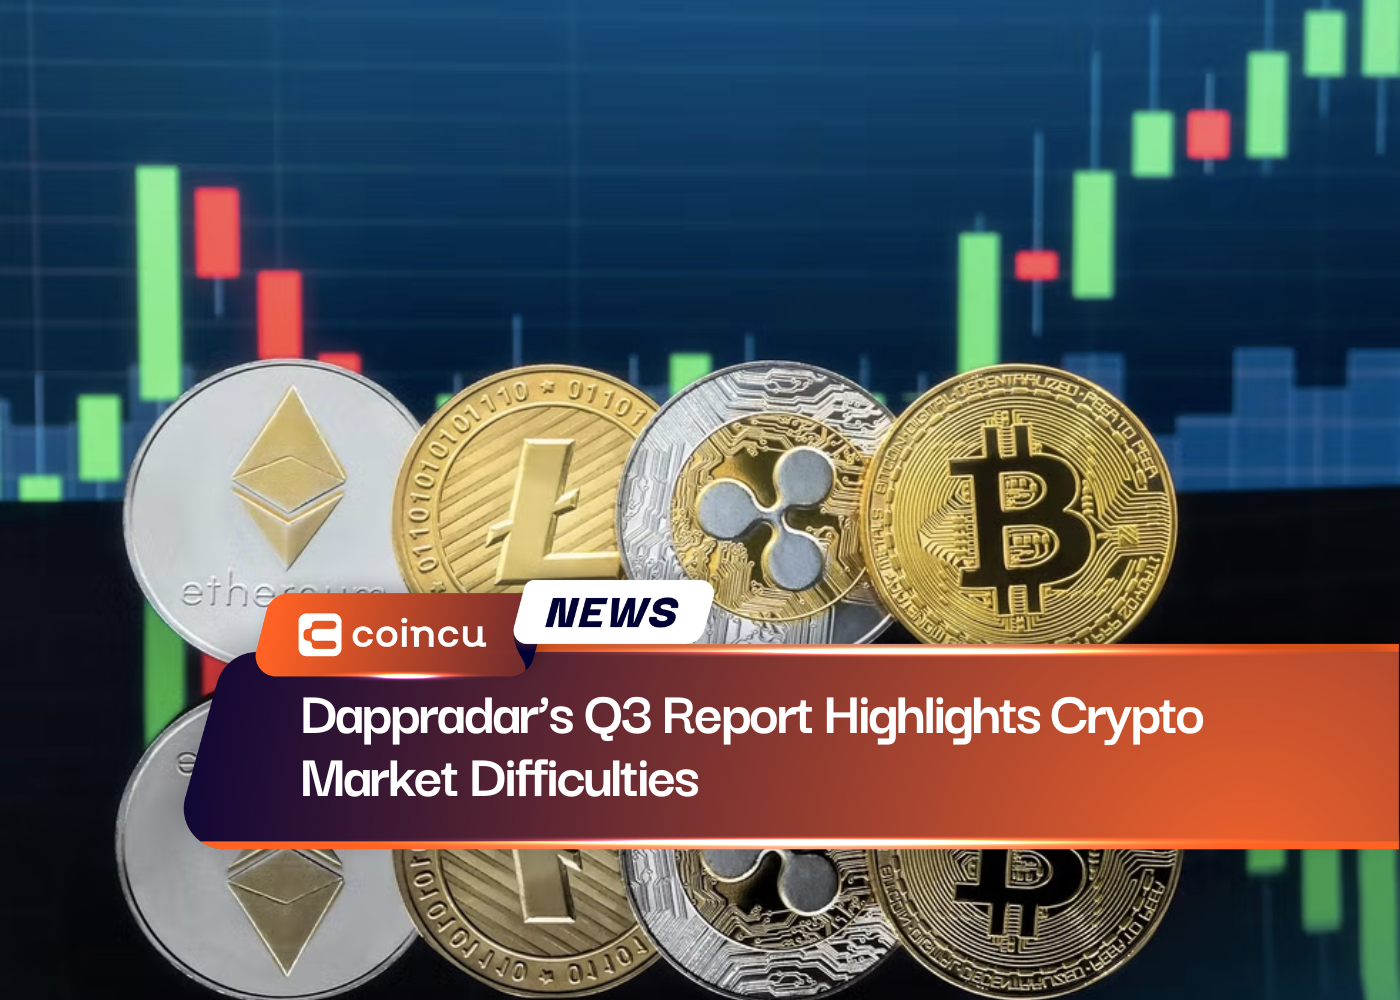 Dappradar’s Q3 Report Highlights Crypto Market Difficulties